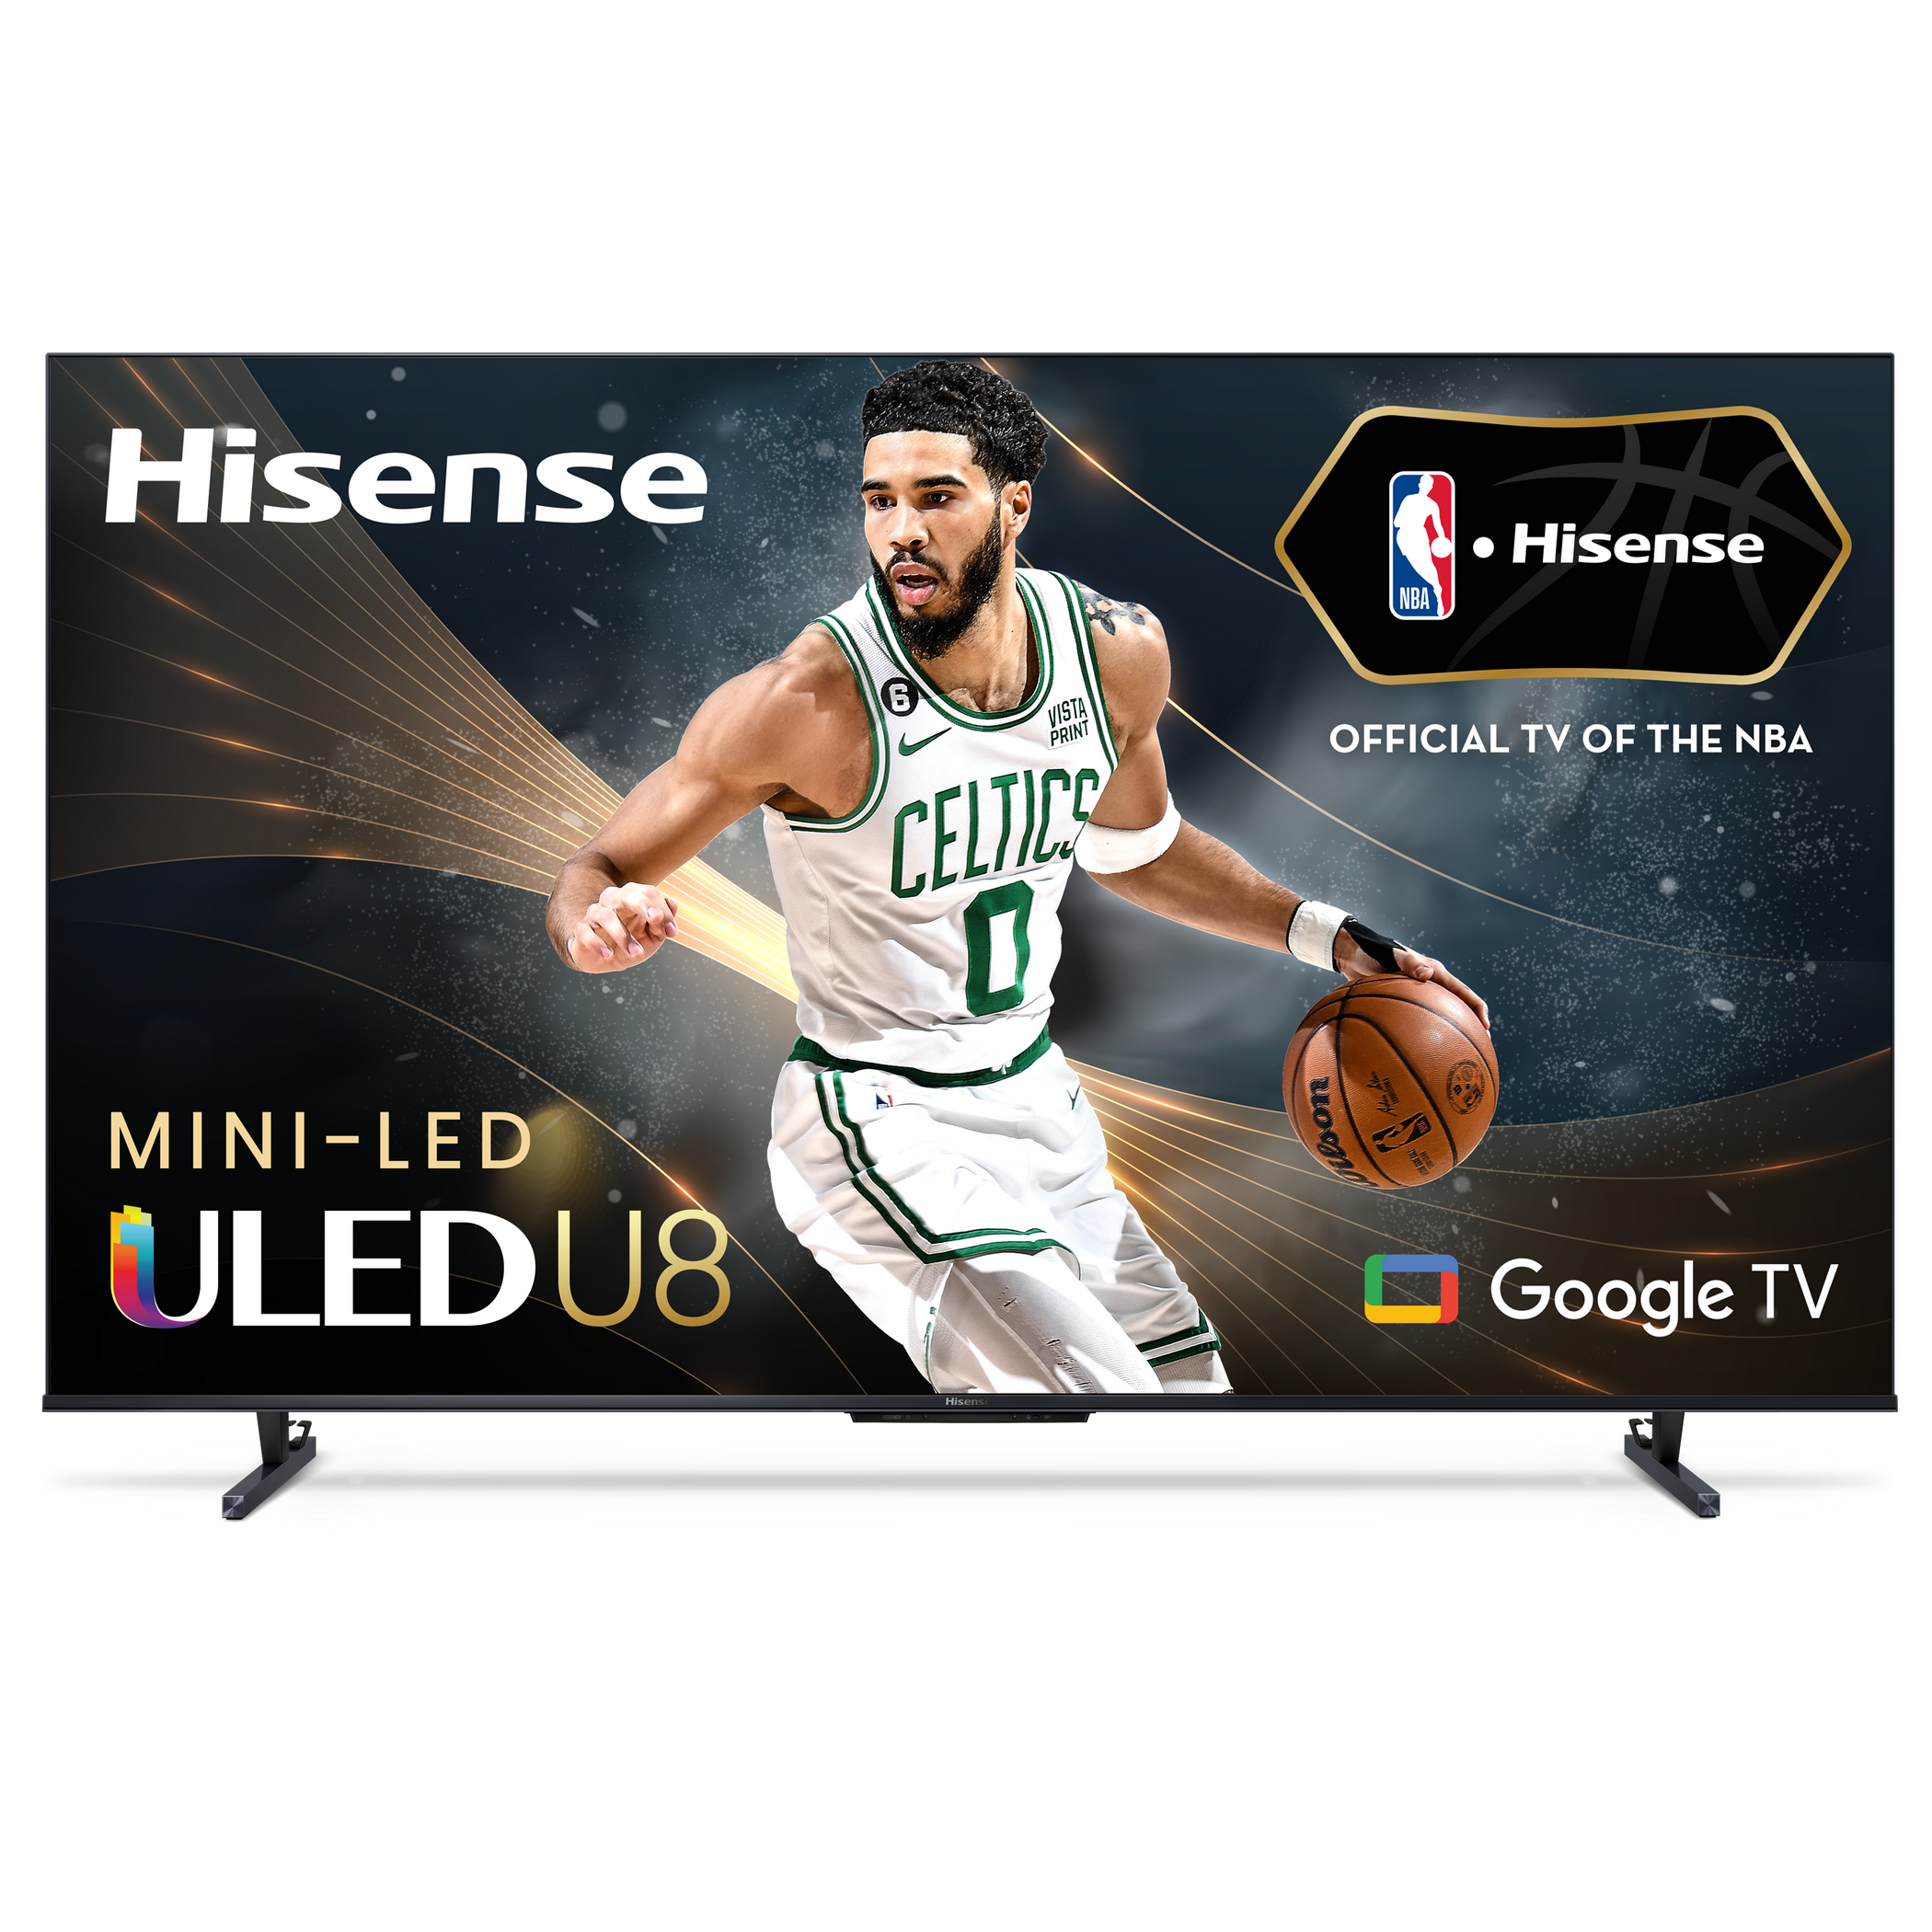 Hisense 65" Class U8 Series Mini-LED ULED 4K UHD Google Smart TV (65U8K) - QLED, Native 144Hz, 1500-Nit, Dolby Vision IQ, Full Array Local Dimming, Game Mode Pro - image 1 of 15